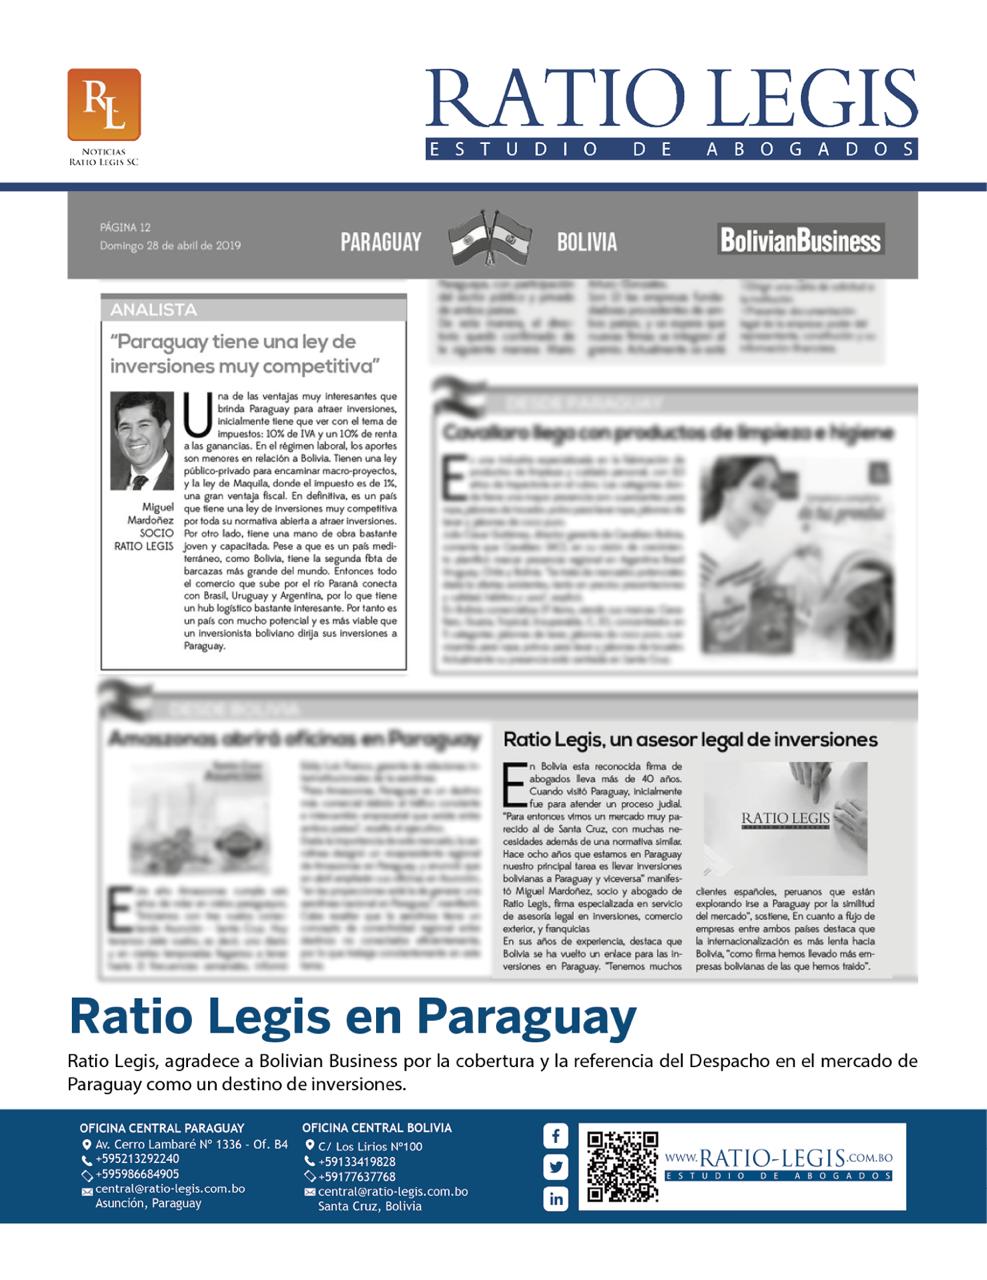 Ratio Legis en Paraguay